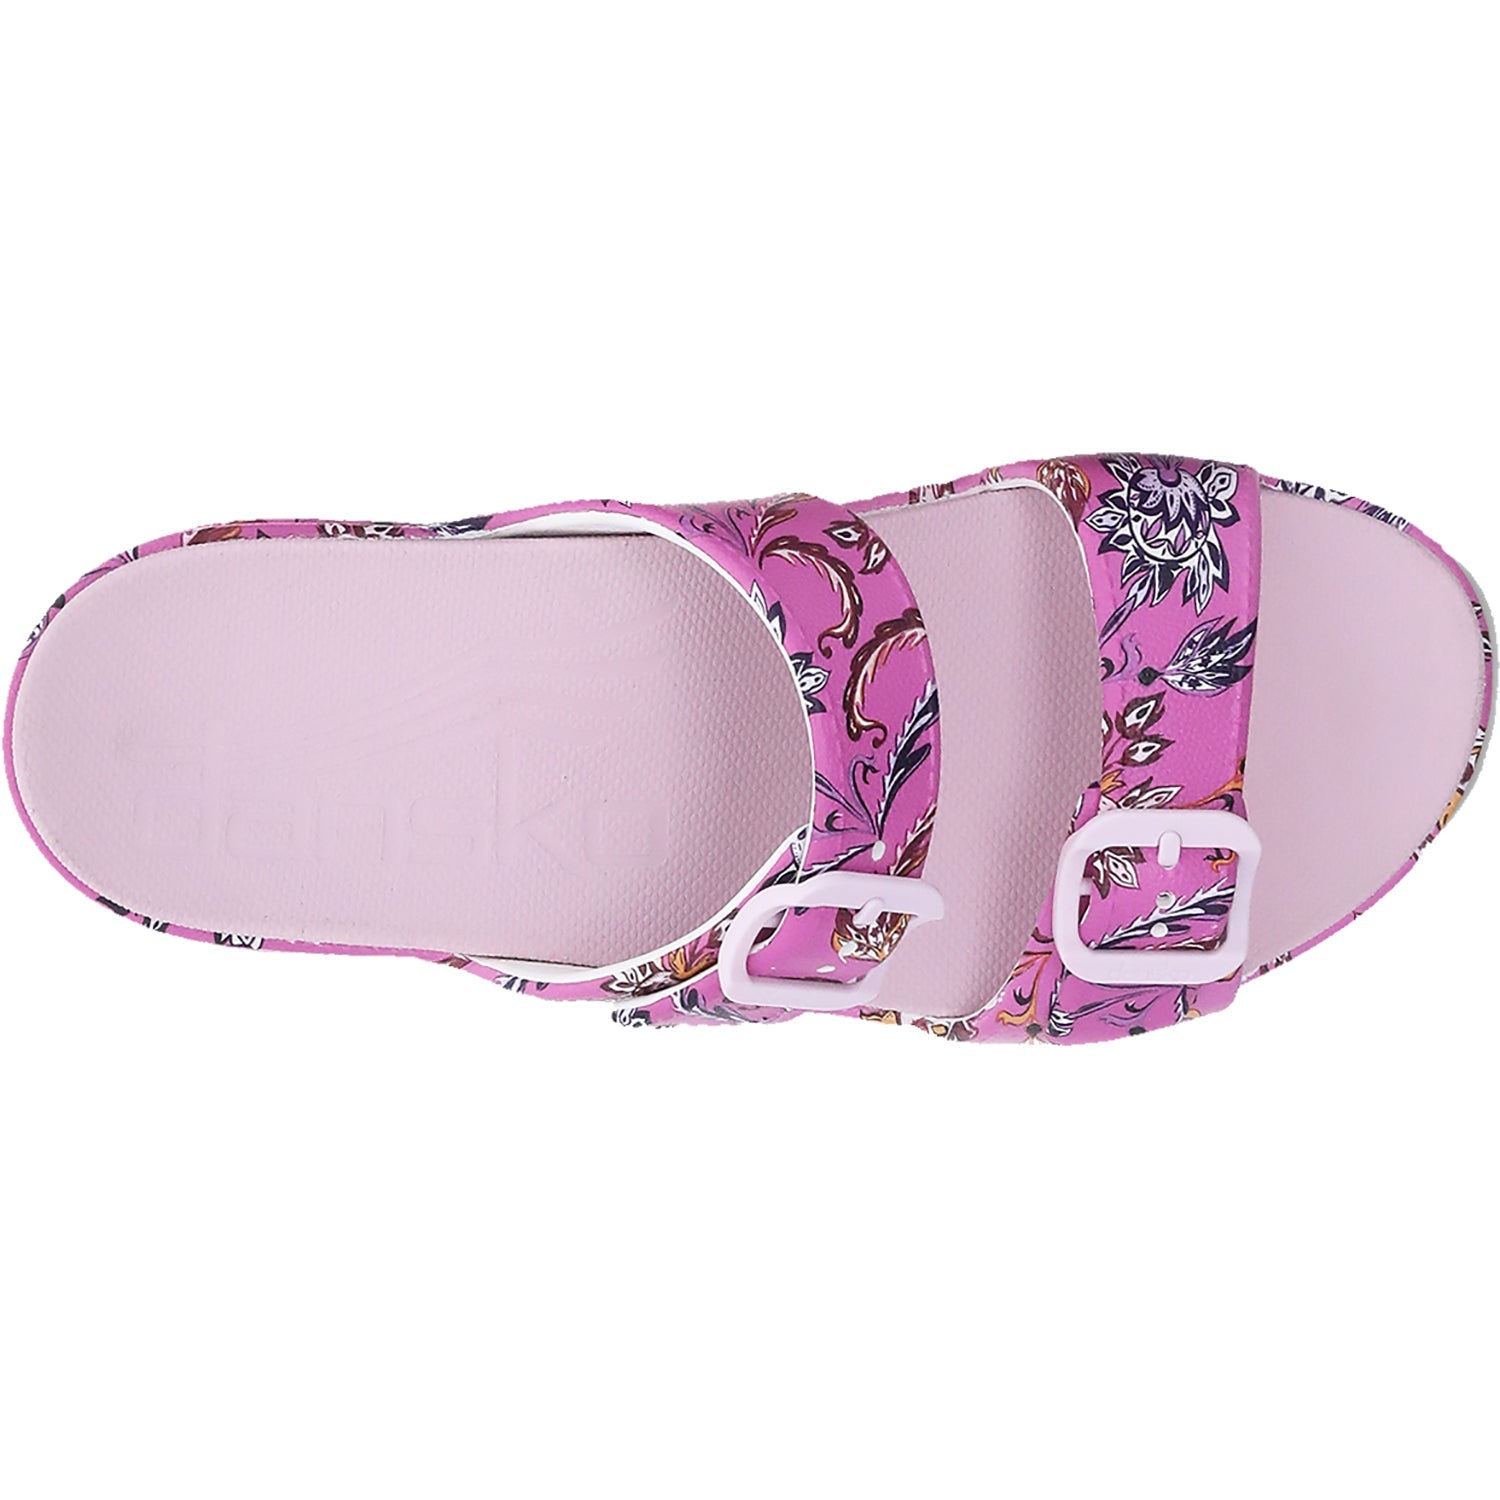 Dansko Kandi Paisley Floral | Women's Slide Sandals | Footwear etc.